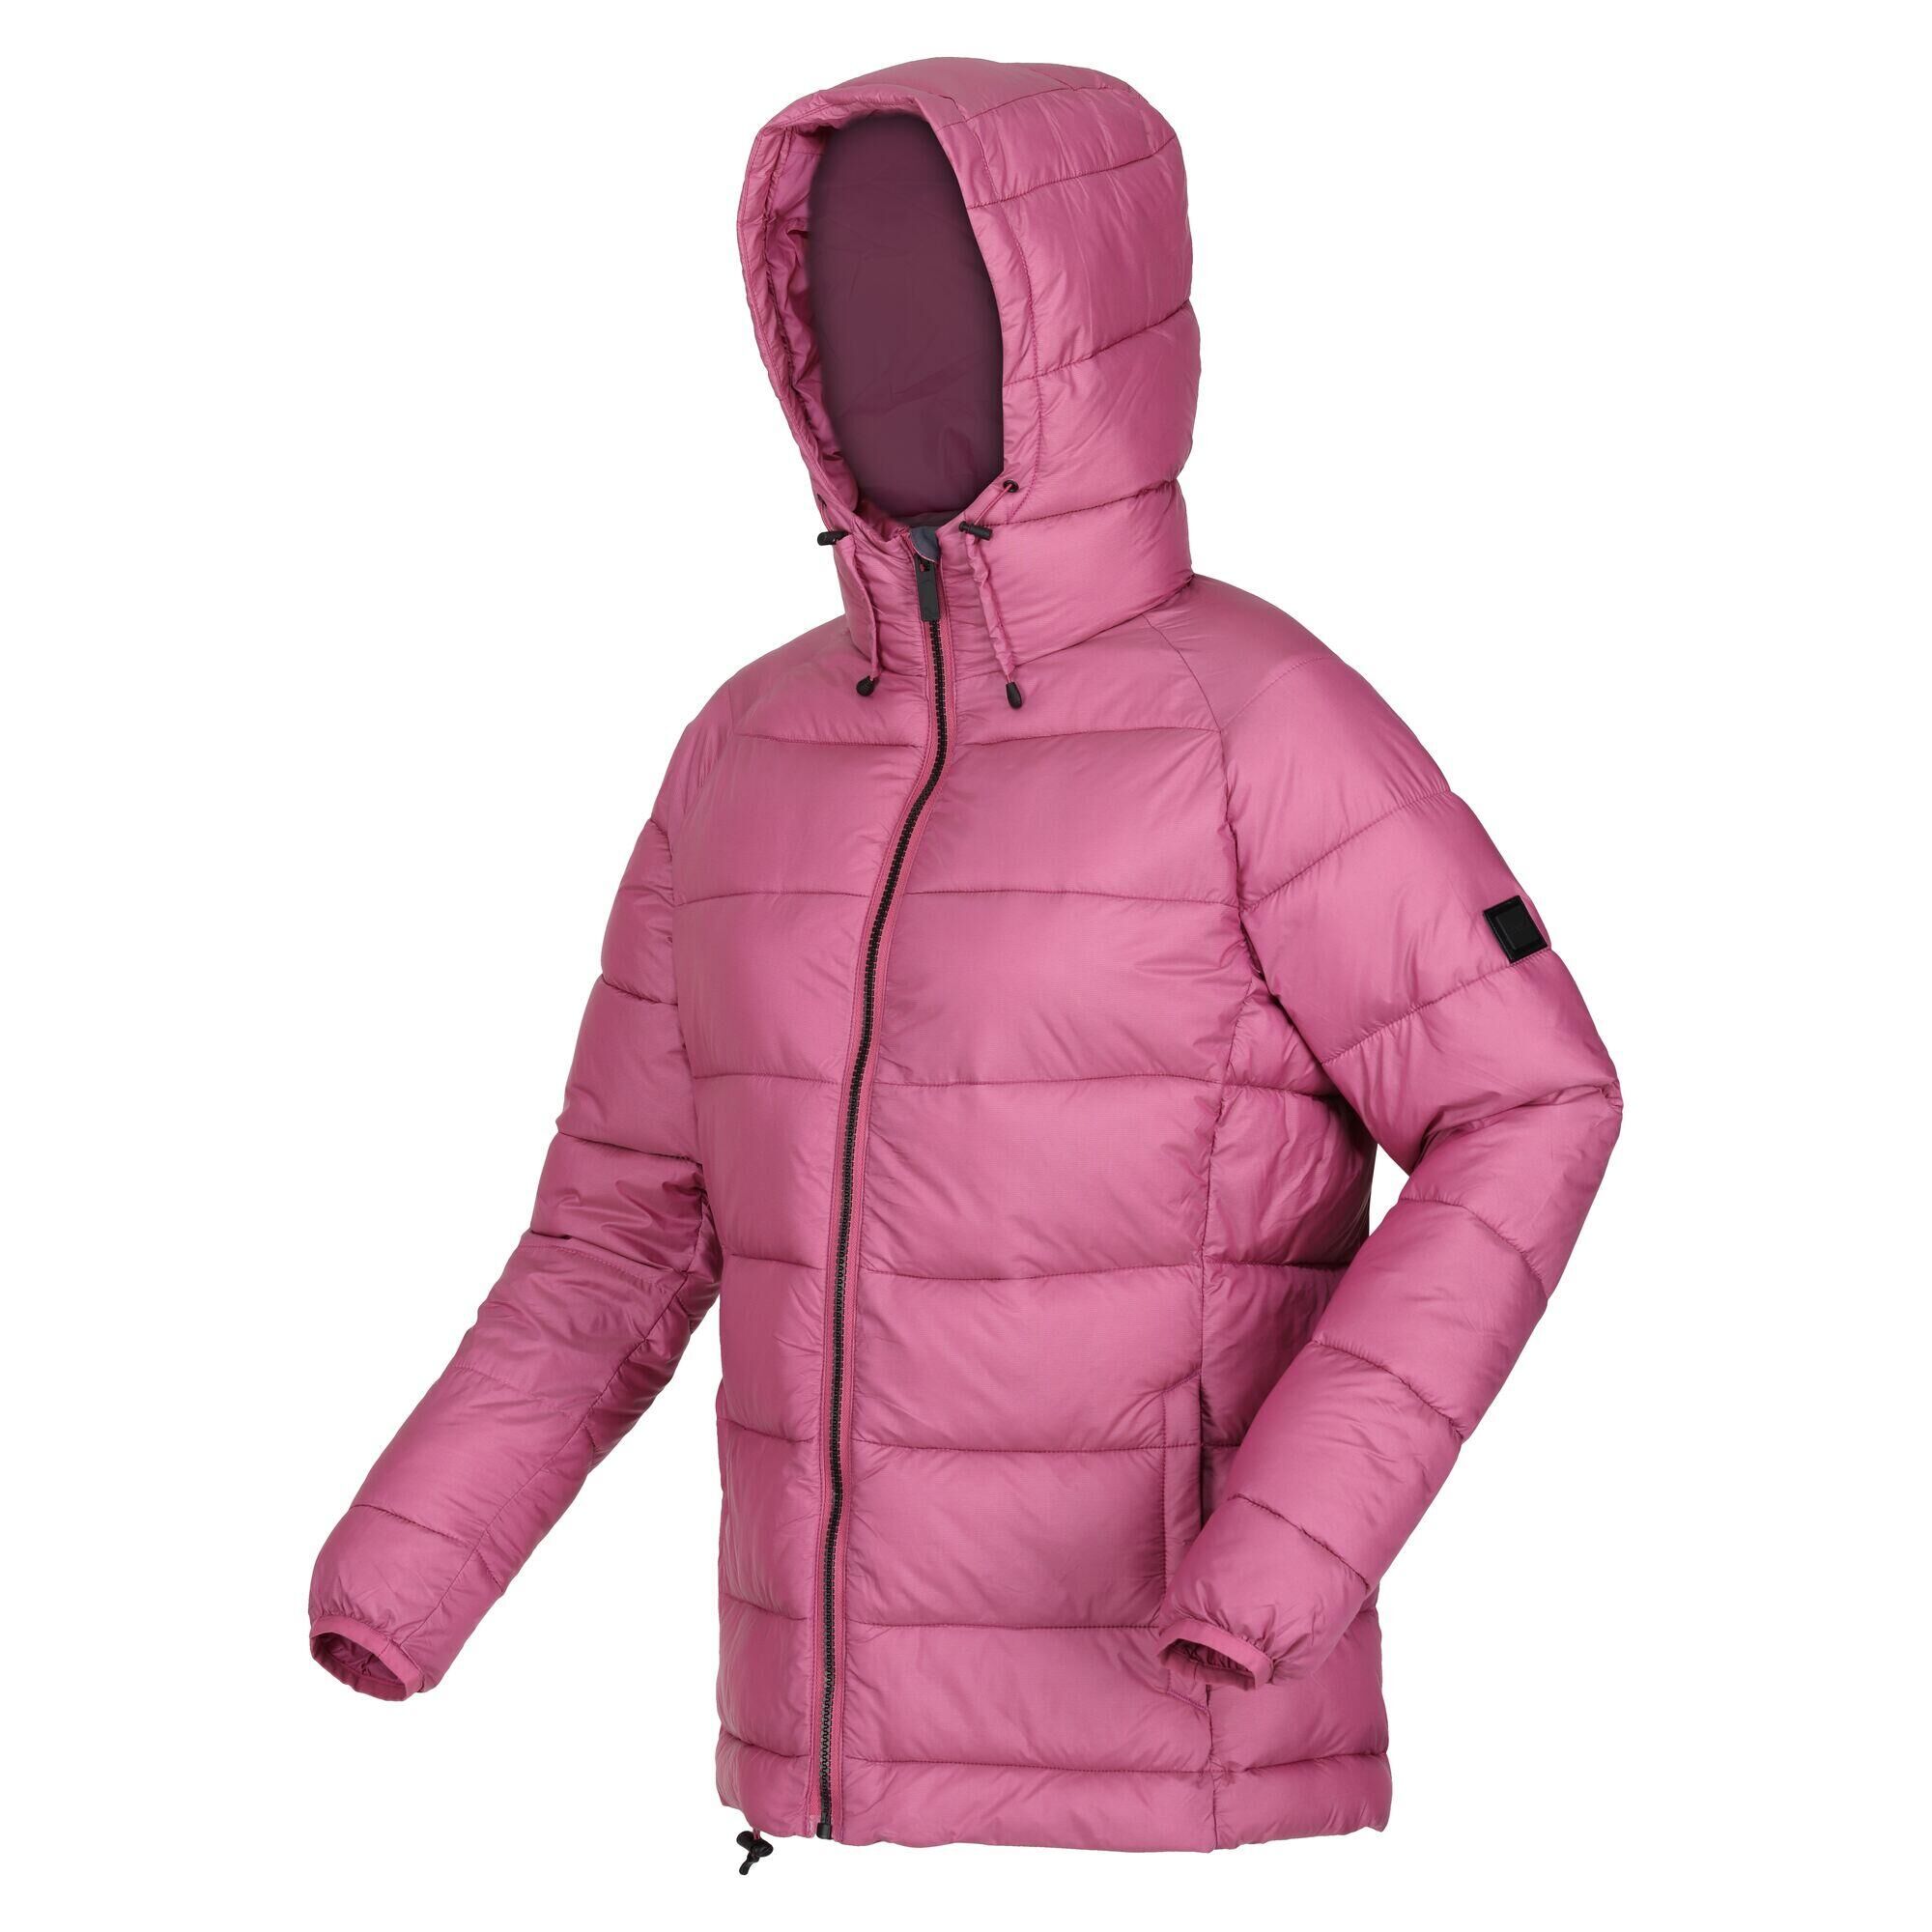 REGATTA Women's Toploft II Hooded Puffer Jacket